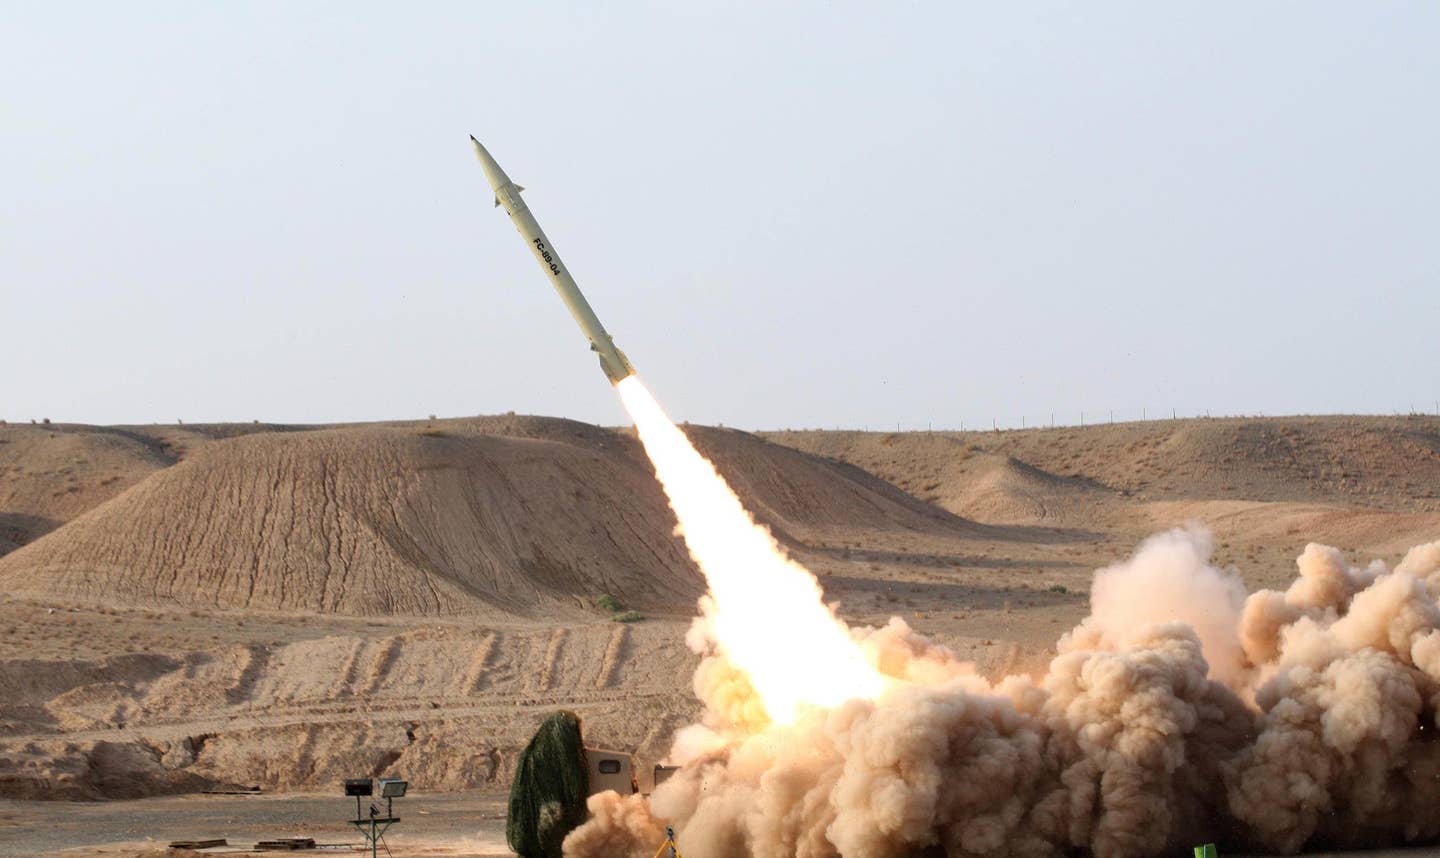 Iran will ship its Fateh-110 short range ballistic missiles to Russia in the next few weeks, an intelligence source in Ukraine tells <em>The War Zone</em>. (Photo by Mohsen Shandiz/Corbis via Getty Images)